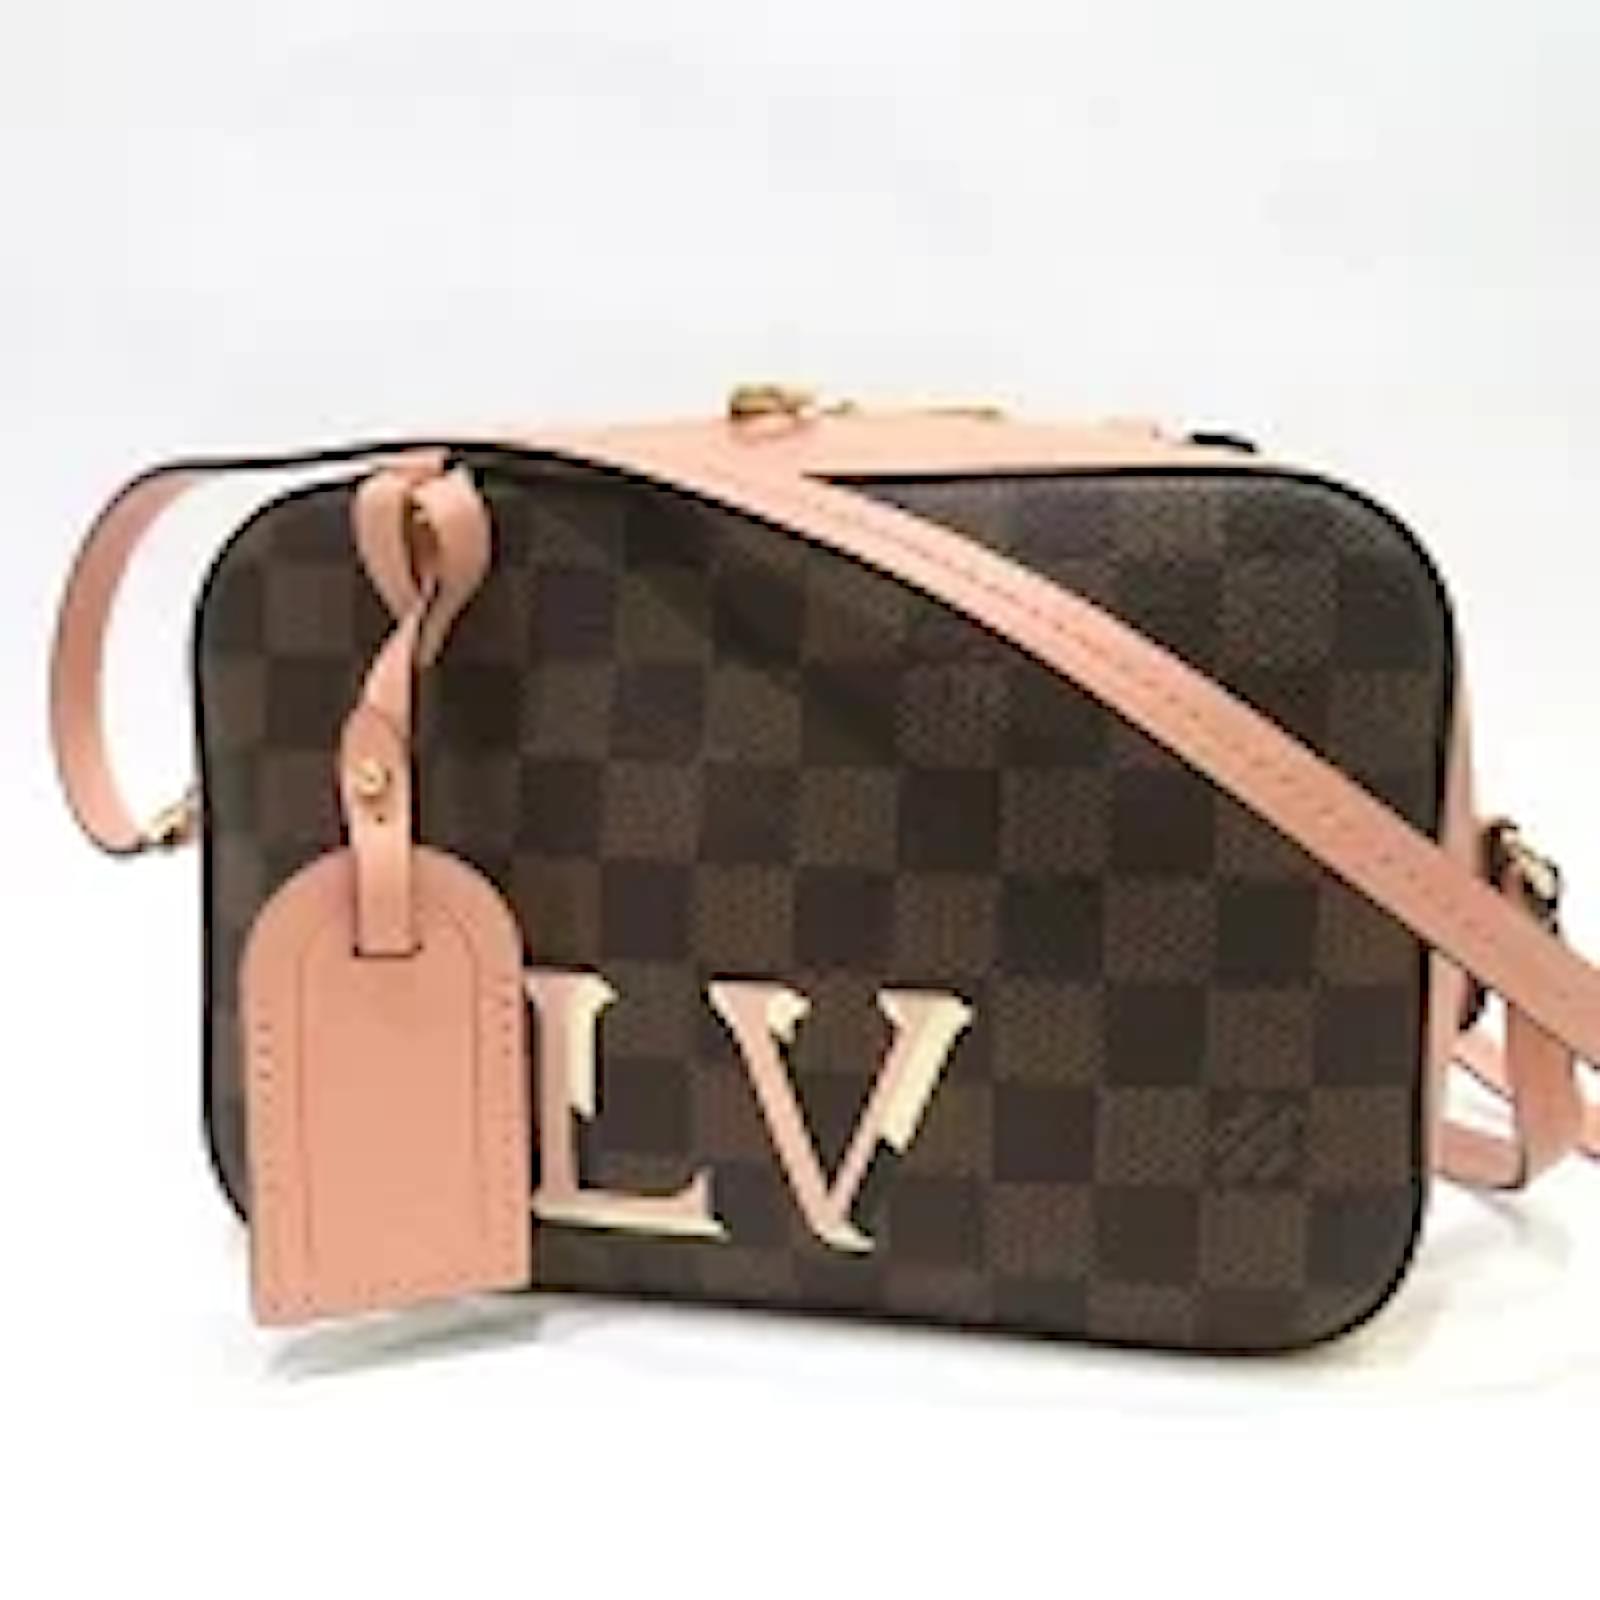 Used Good Condition Louis Vuitton Santa Monica Shoulder Bag S Rank